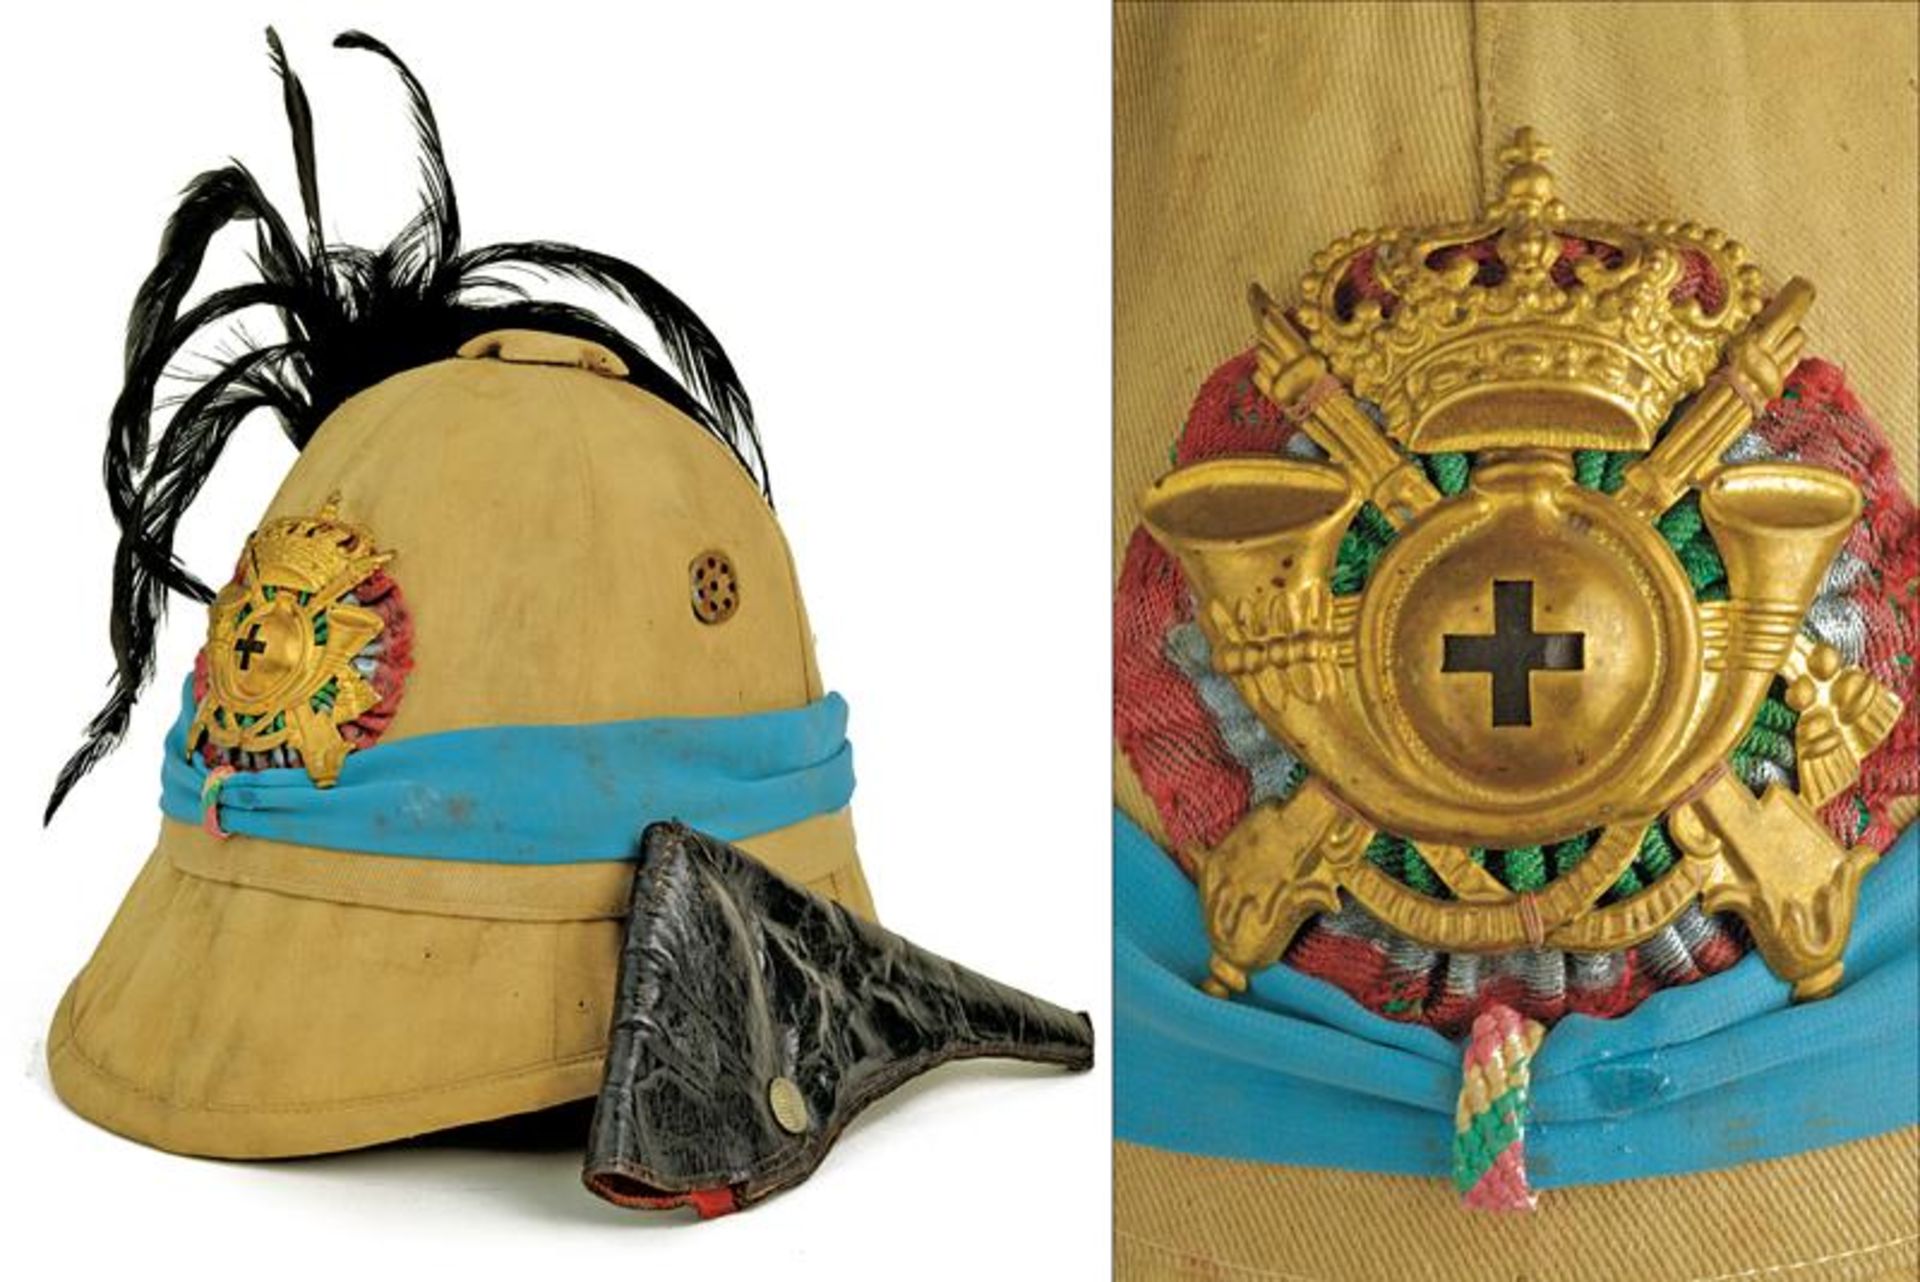 A 'Cacciatori d'Africa' officer's colonial helmet